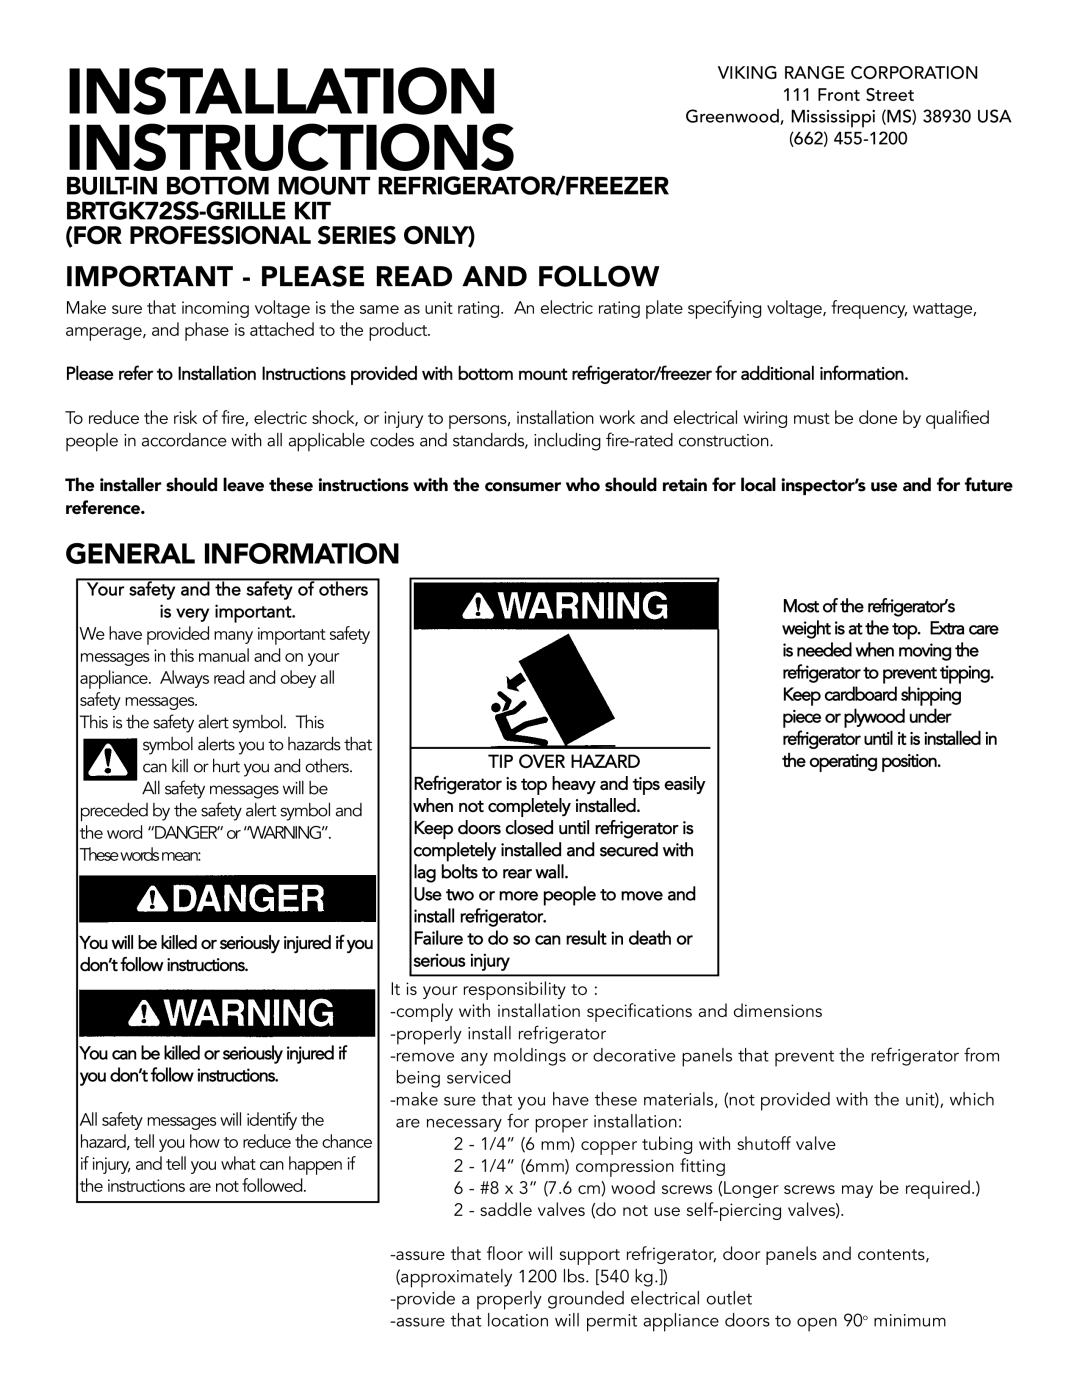 Viking BRTGK72SS installation instructions Important Please Read and Follow, General Information, Viking Range Corporation 